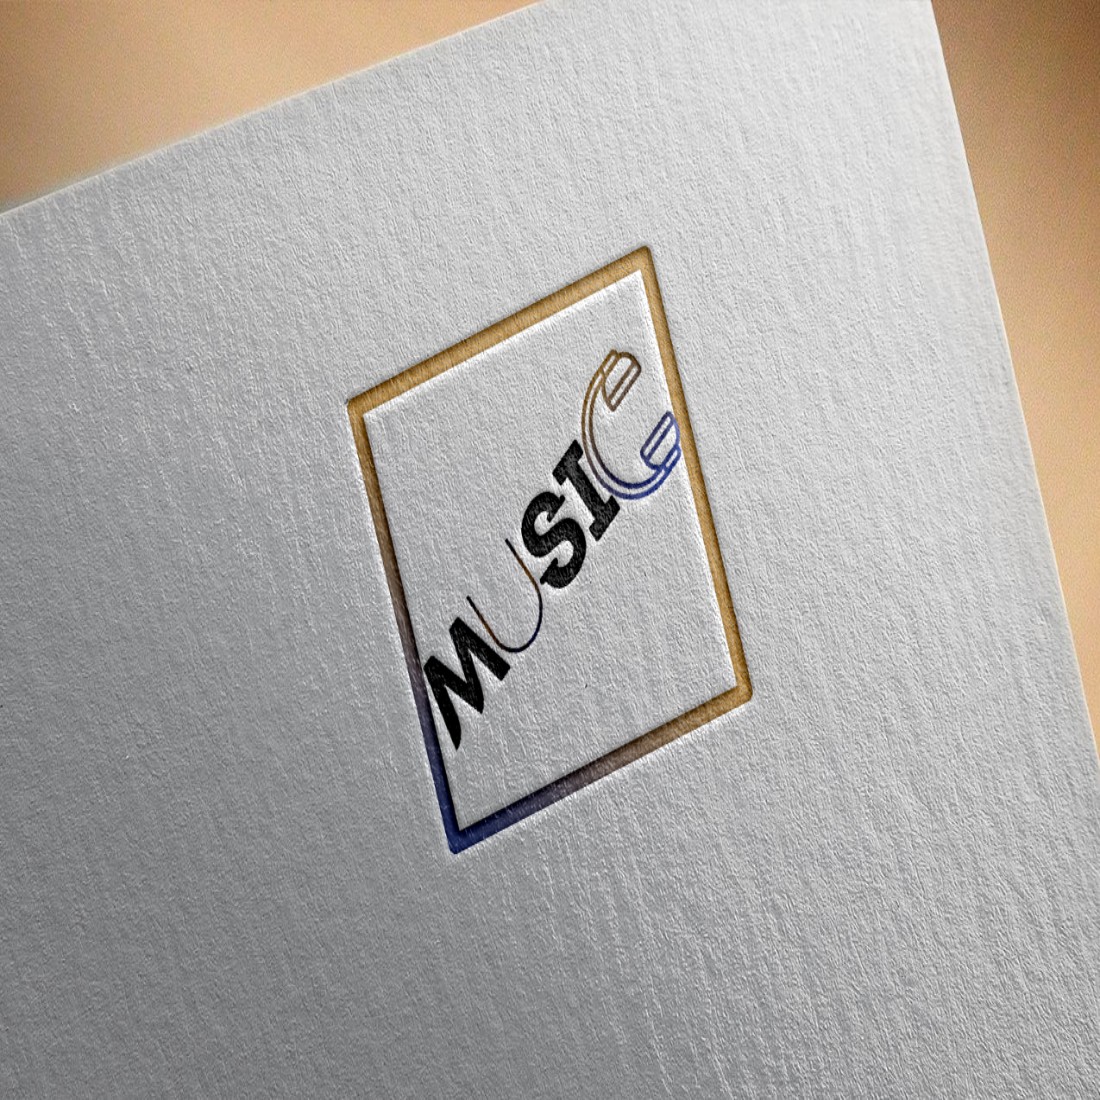 Music Logo Design mockup example on paper.